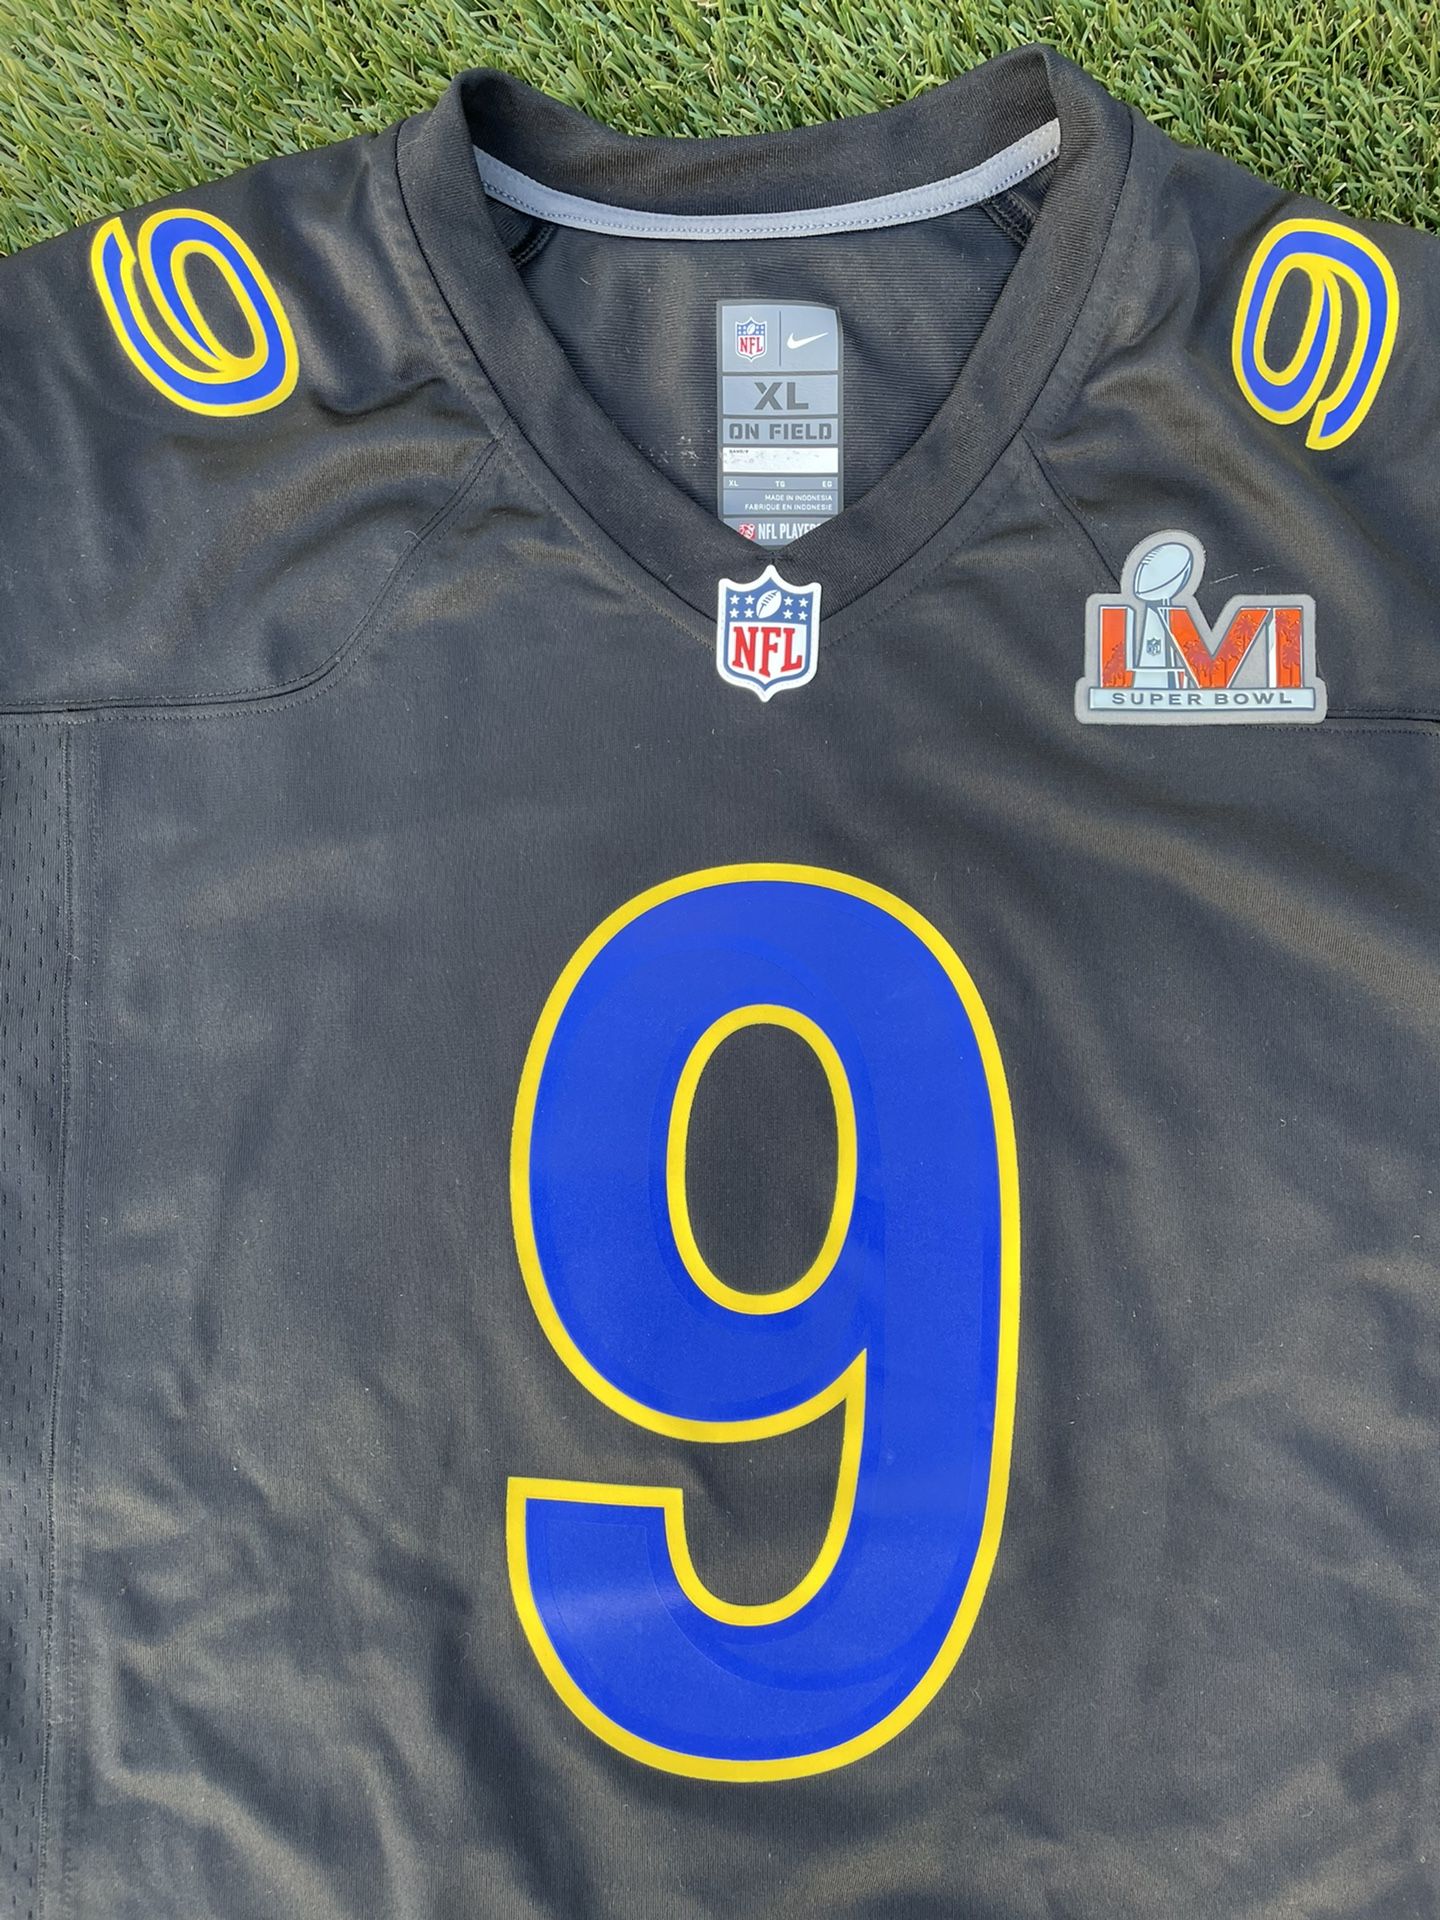 LA Rams Black Super Bowl Jersey XL for Sale in Los Angeles, CA